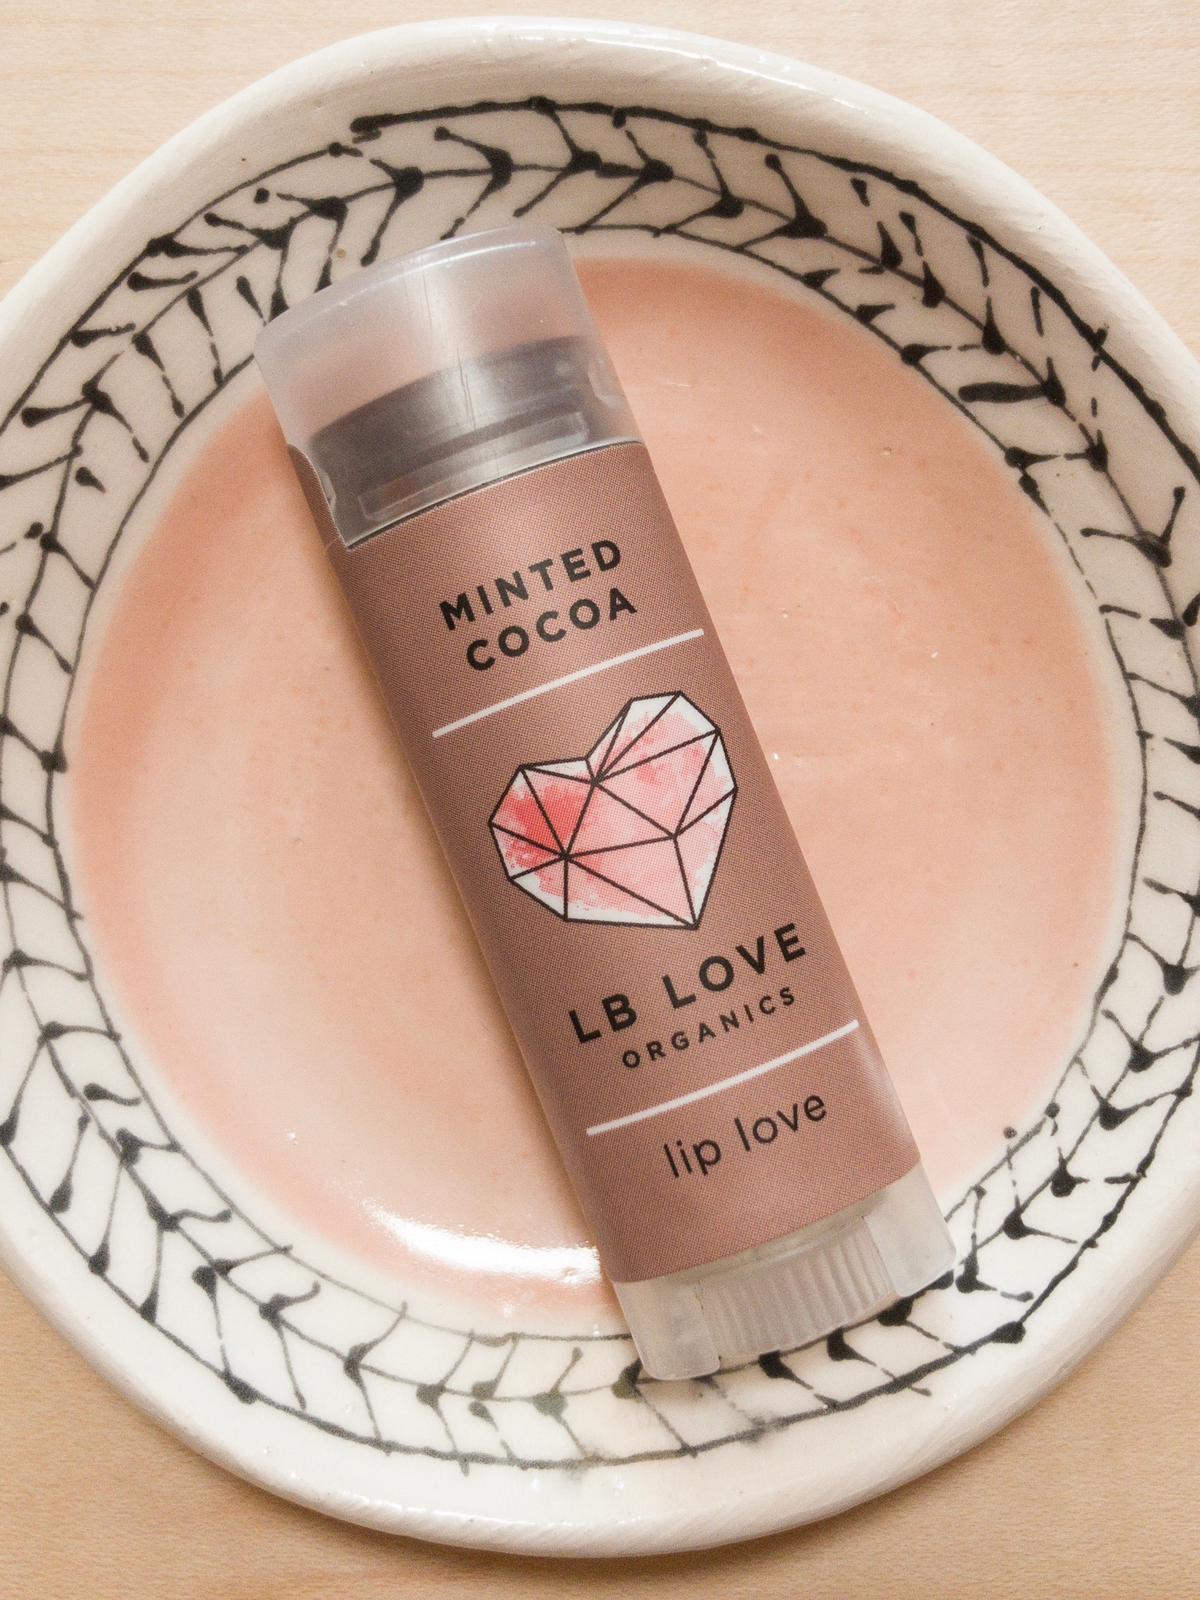 LB Love Organics Minted cocoa chocolate lip balm dry and sensitive lips